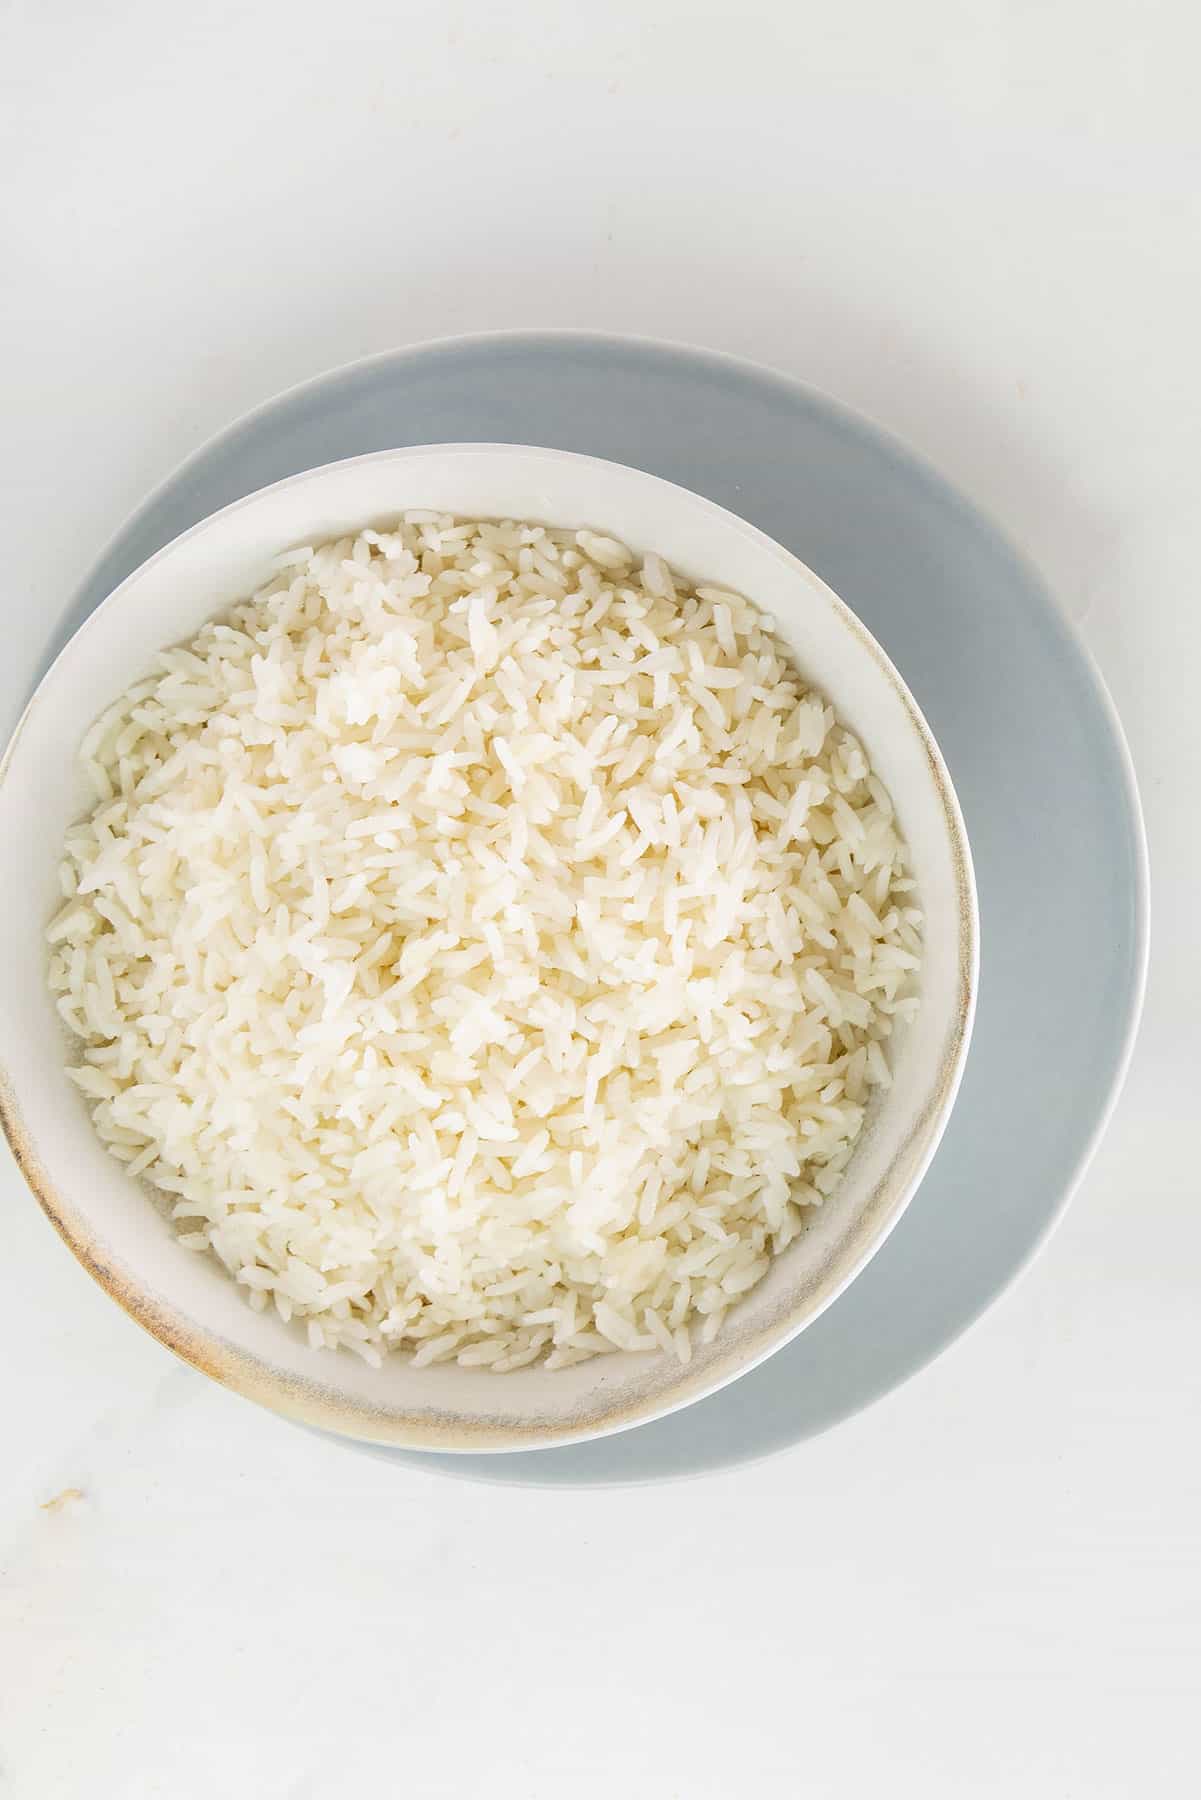 Instant pot rice.